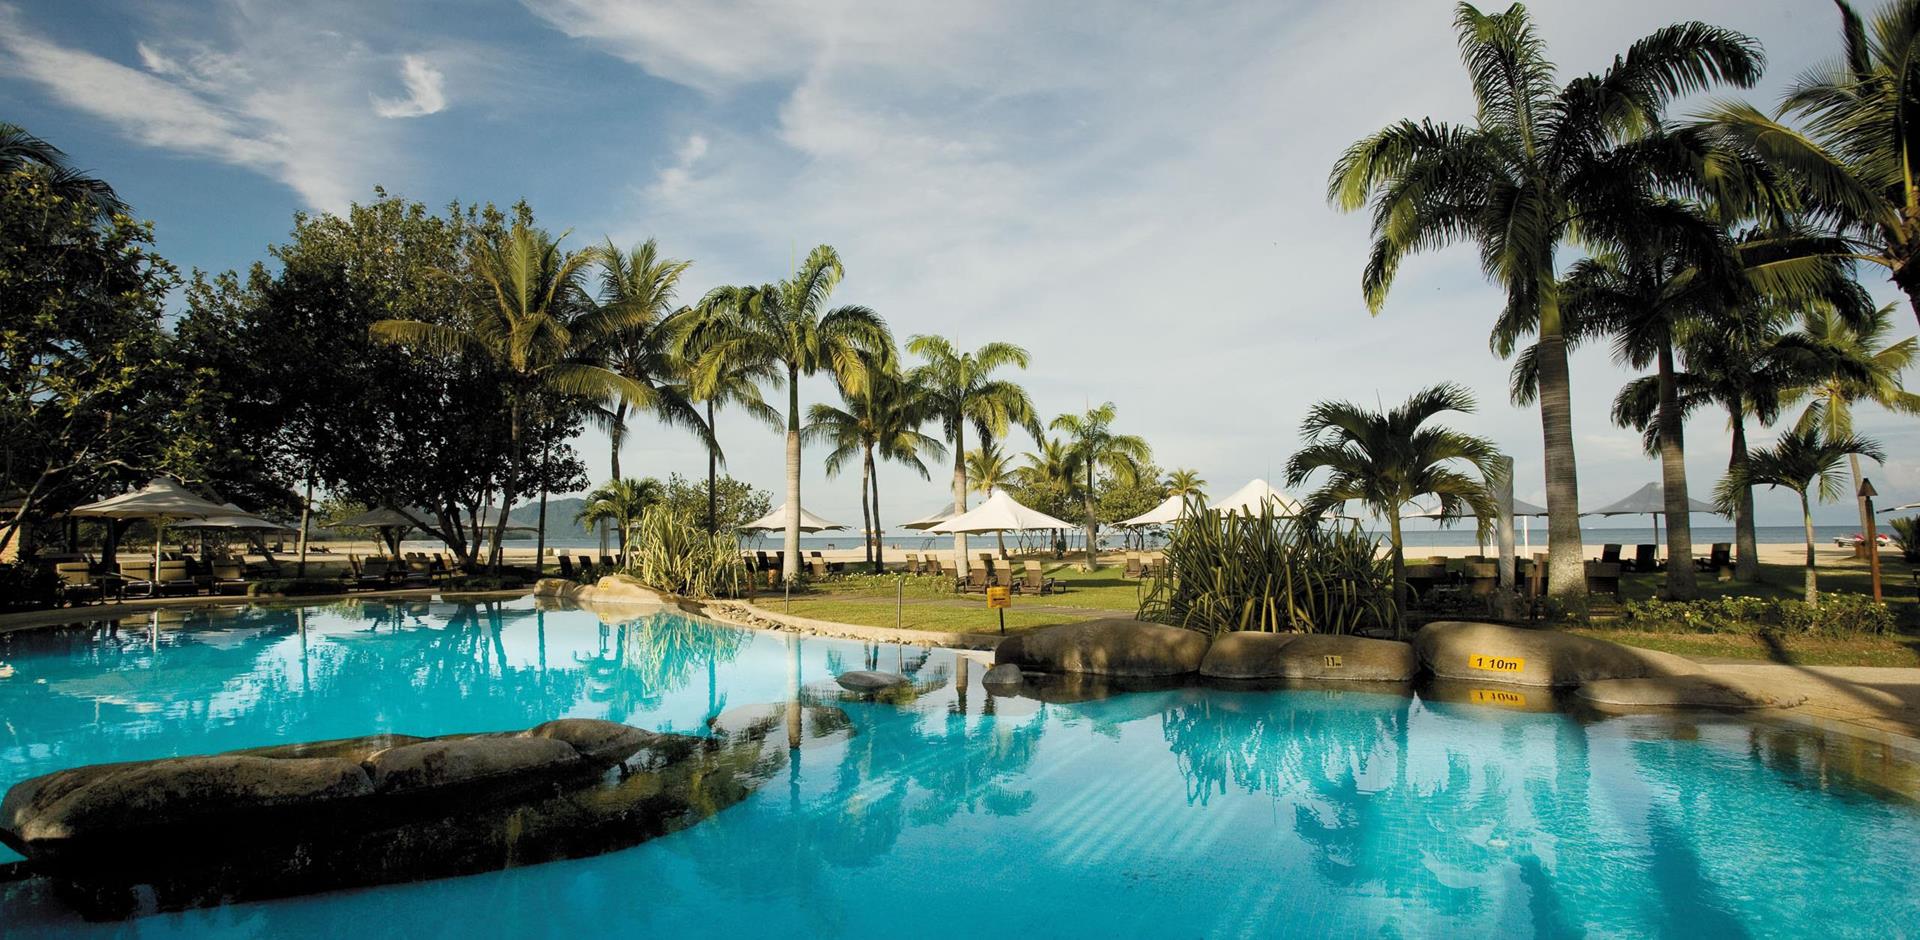 Pool and beach view, Shangri-La's Rasa Ria Resort, Malaysia